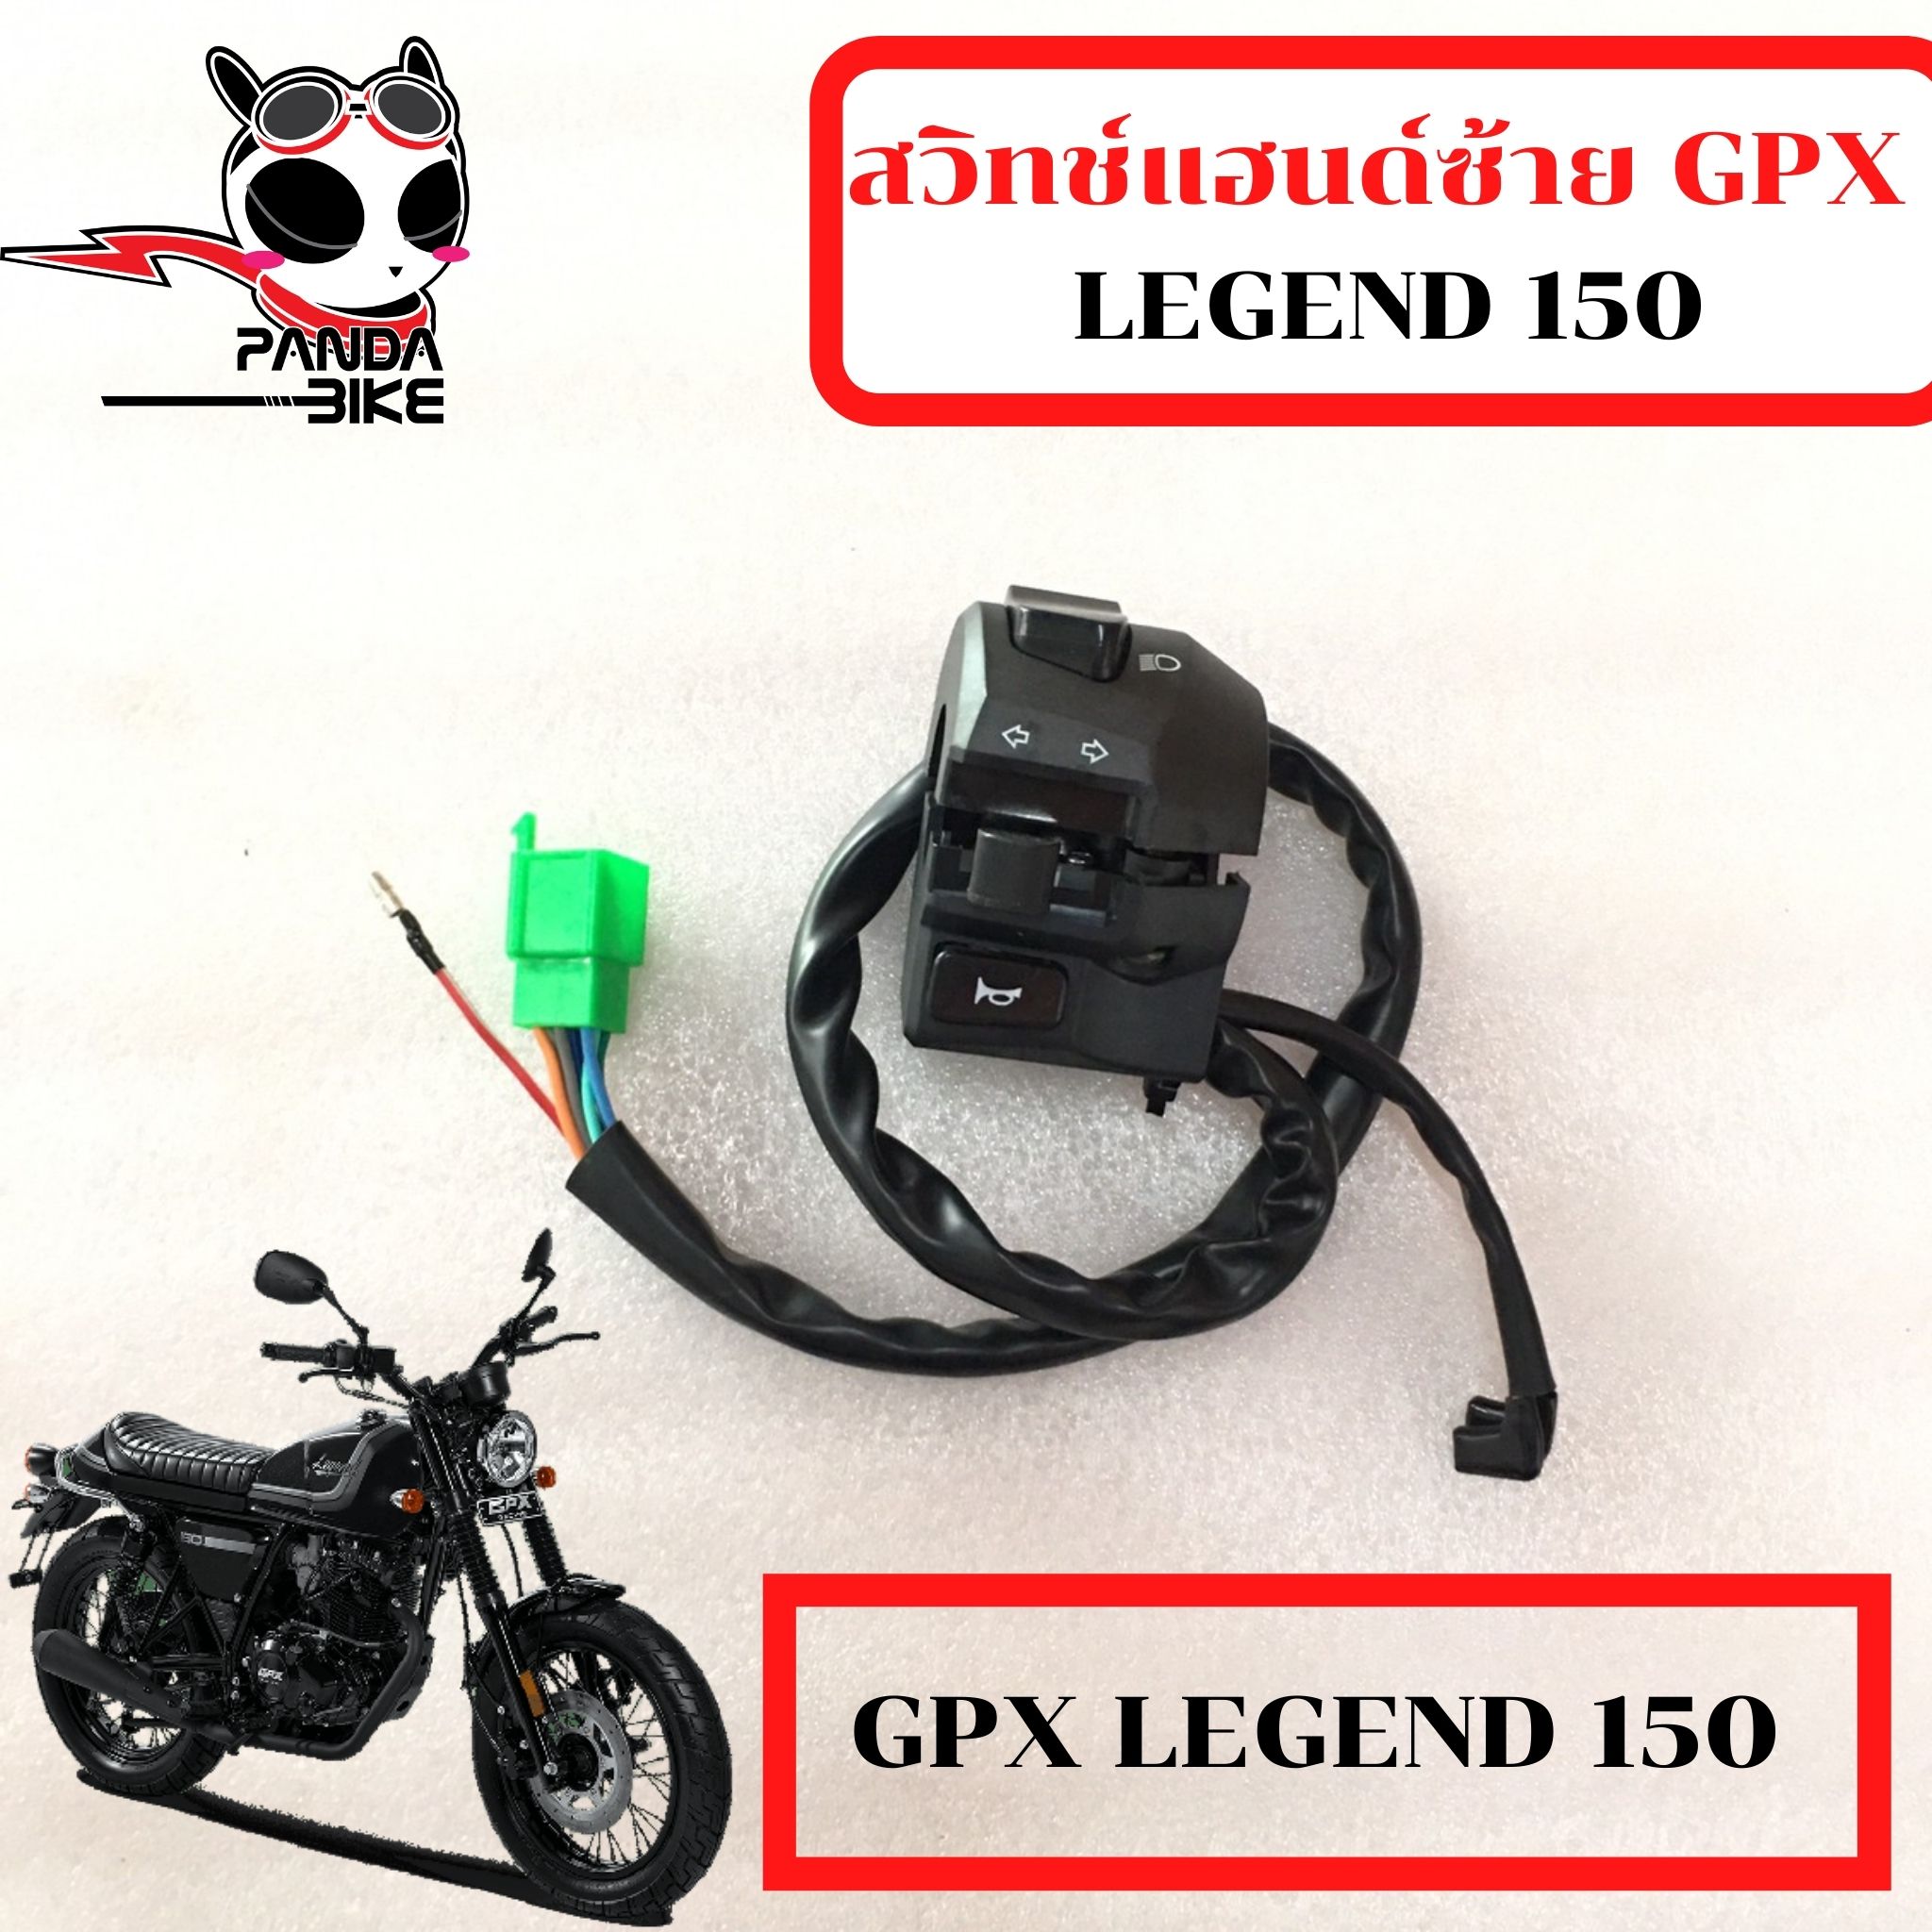 GPX-Legend-150FI - gpxthailand